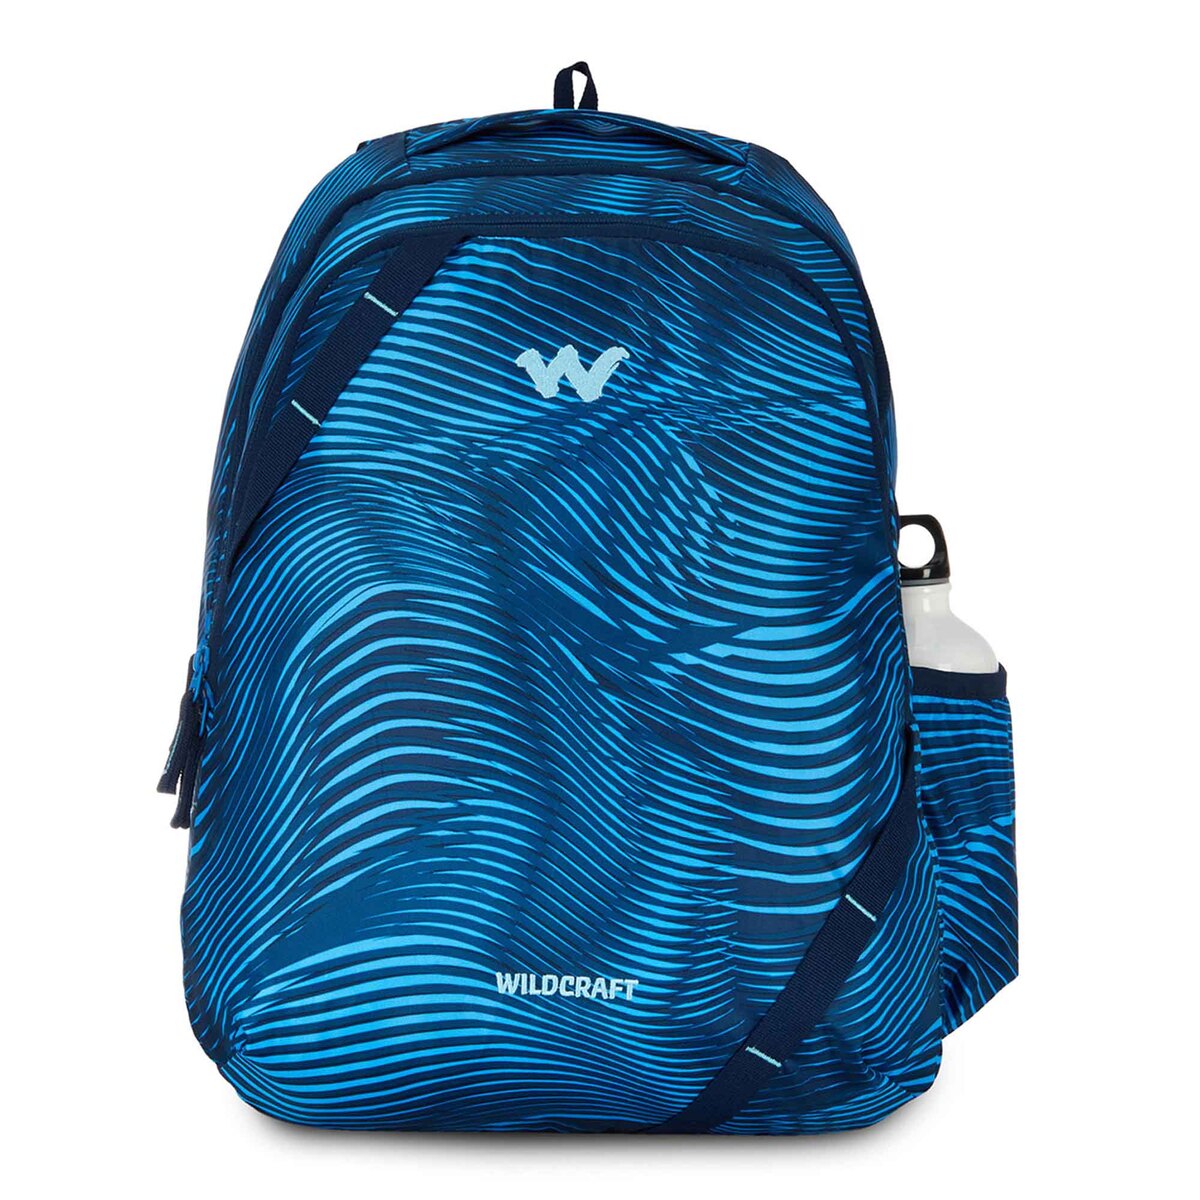 Wildcraft Bravo 35 RC Contour School Bag Pack, 18 Inches, Blue